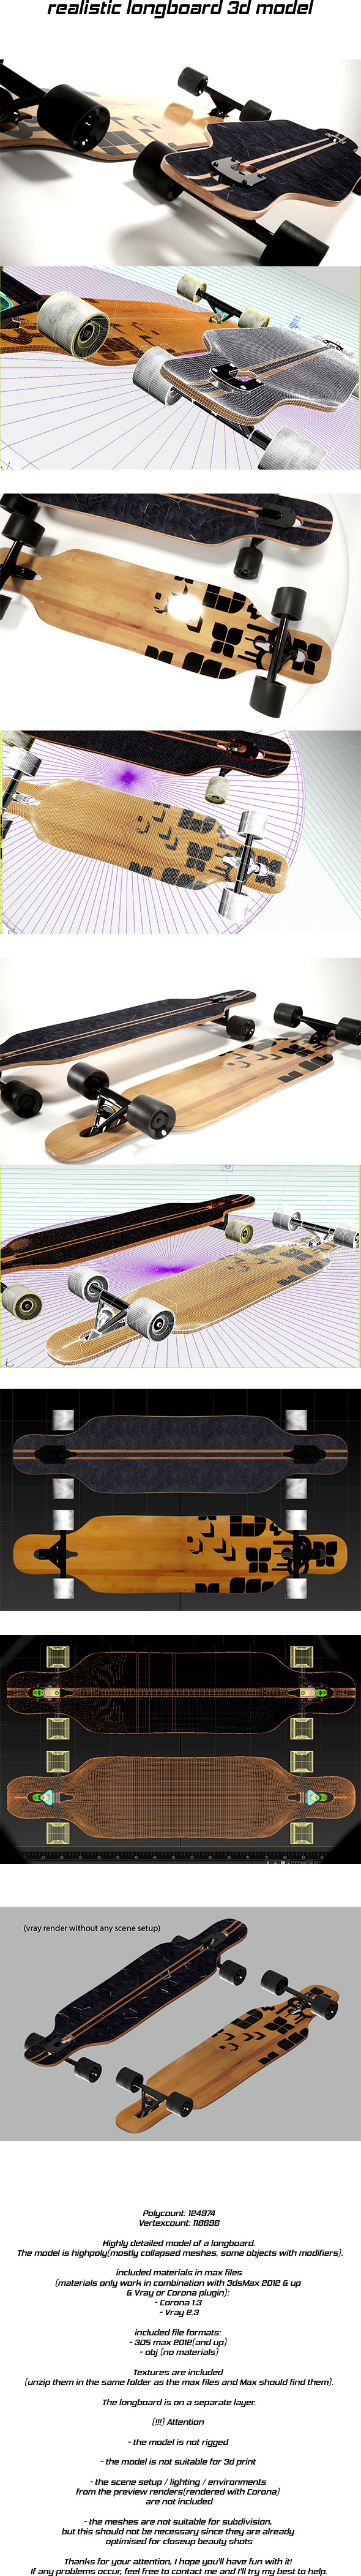 realistic longboard